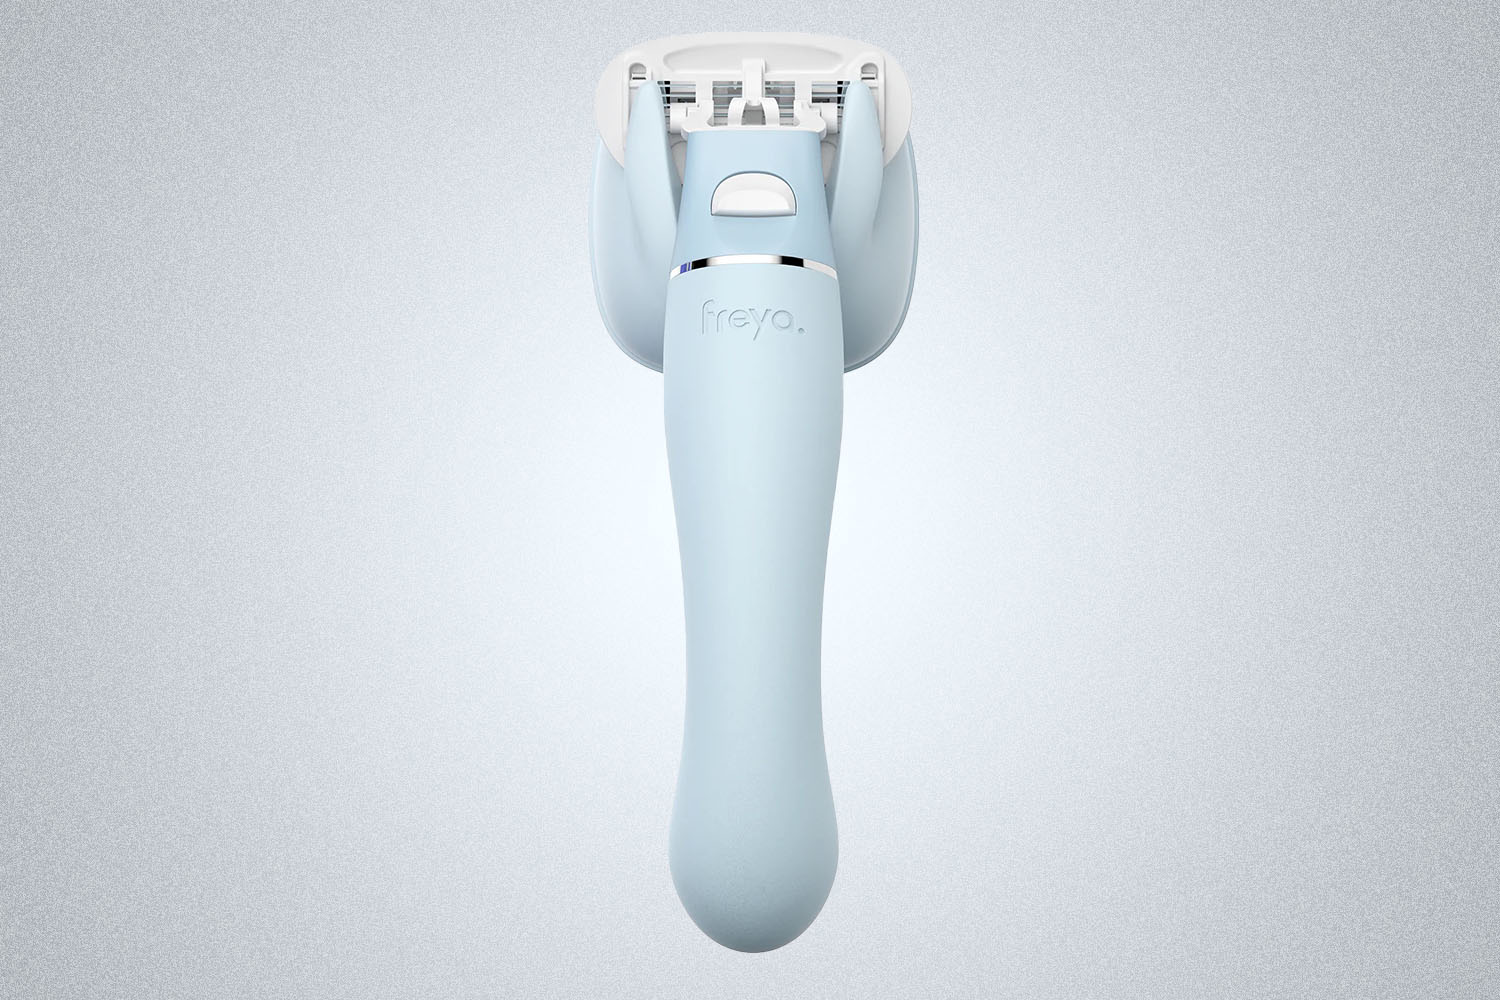 a blue razor/vibrator from Freya on a grey background